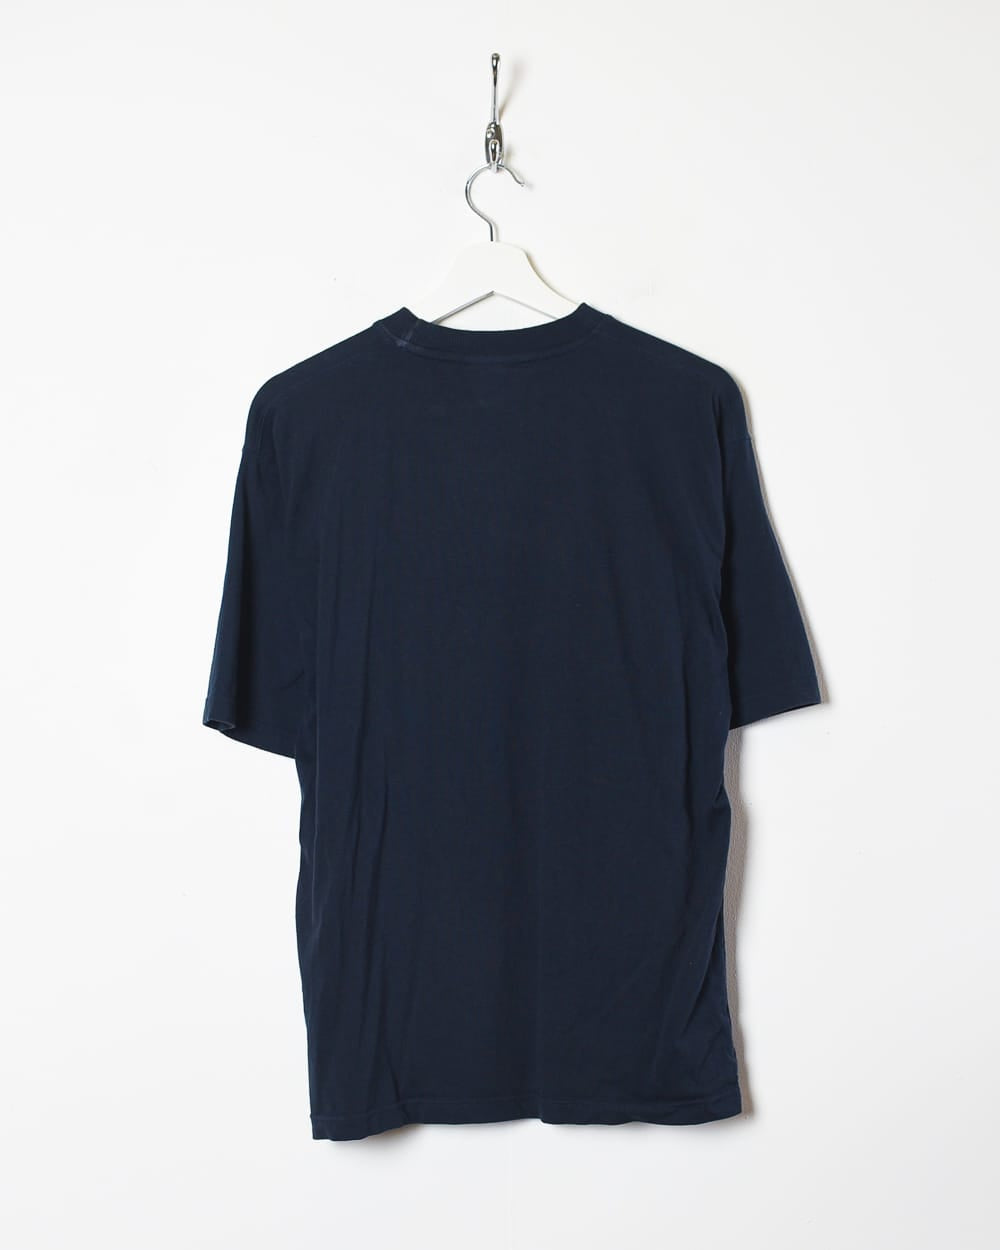 Black Reebok T-Shirt - Medium